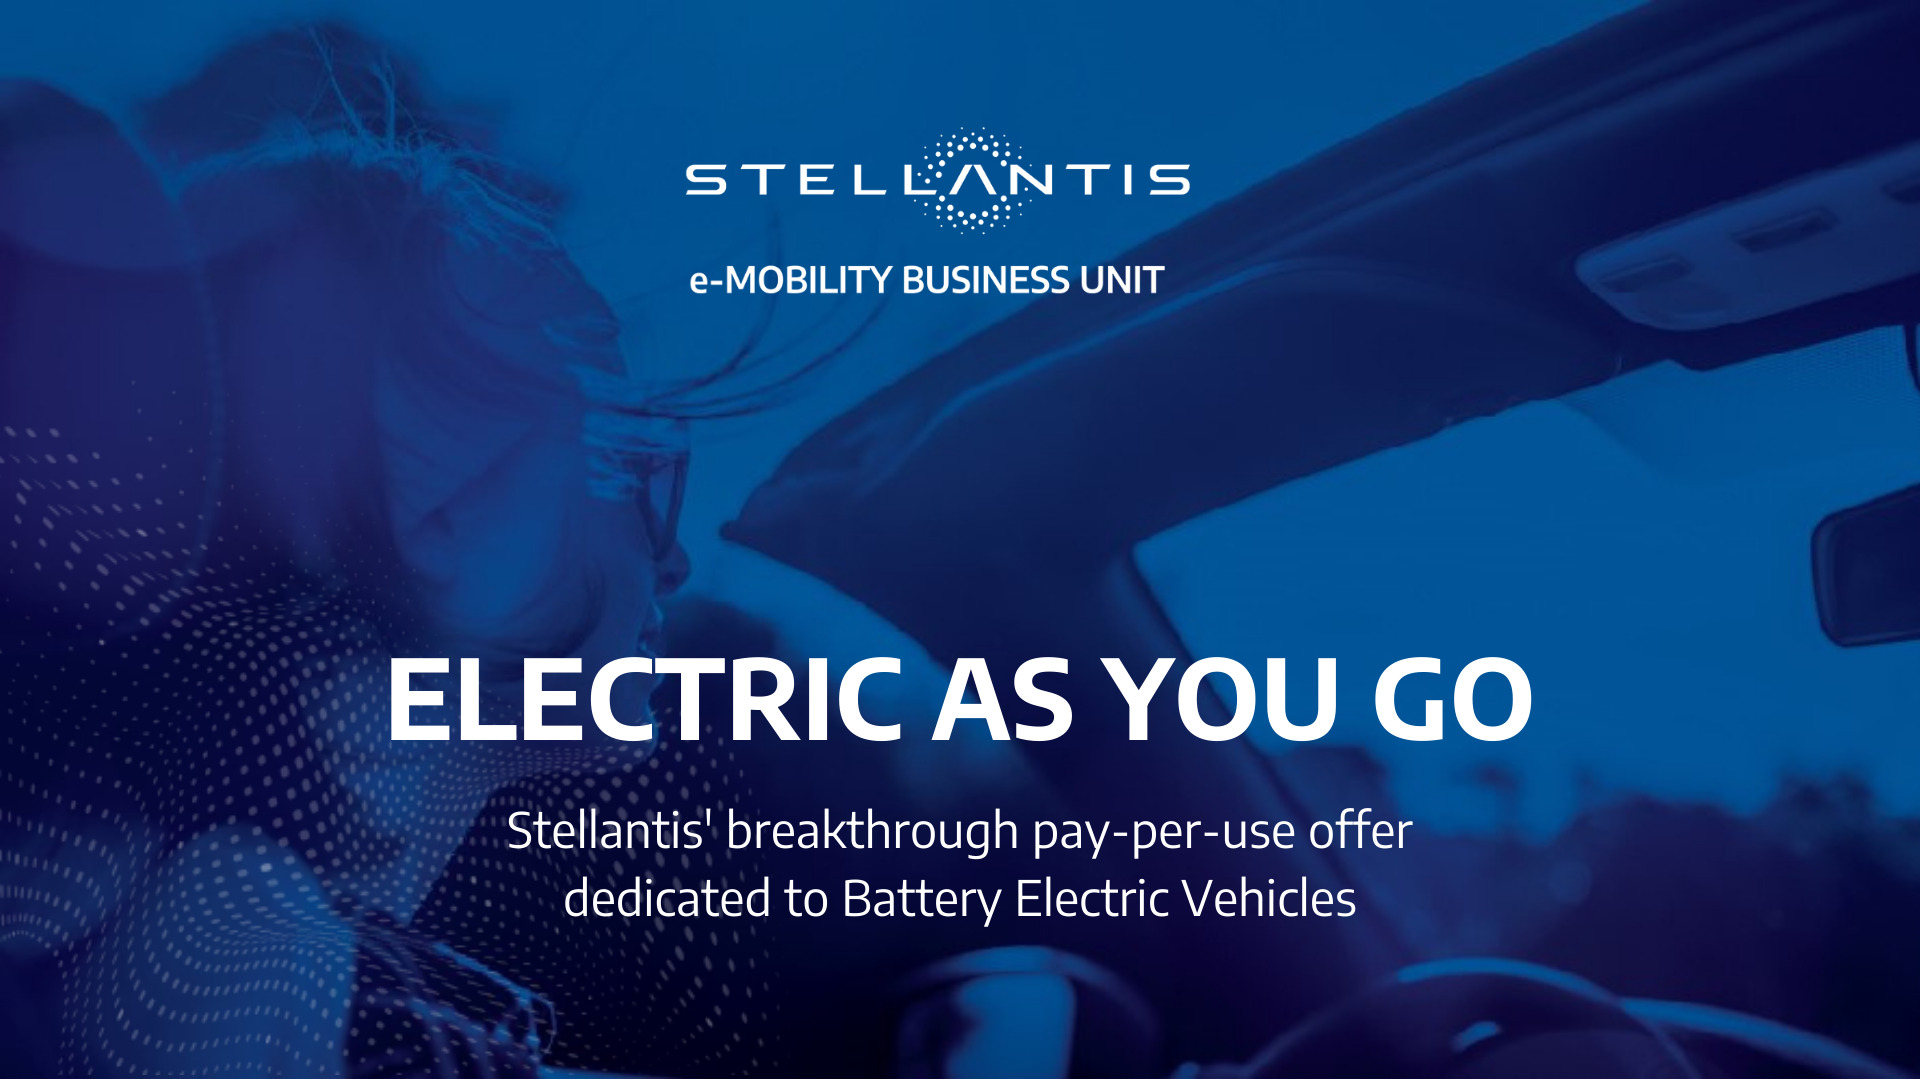 Stellantis Electric As You Go